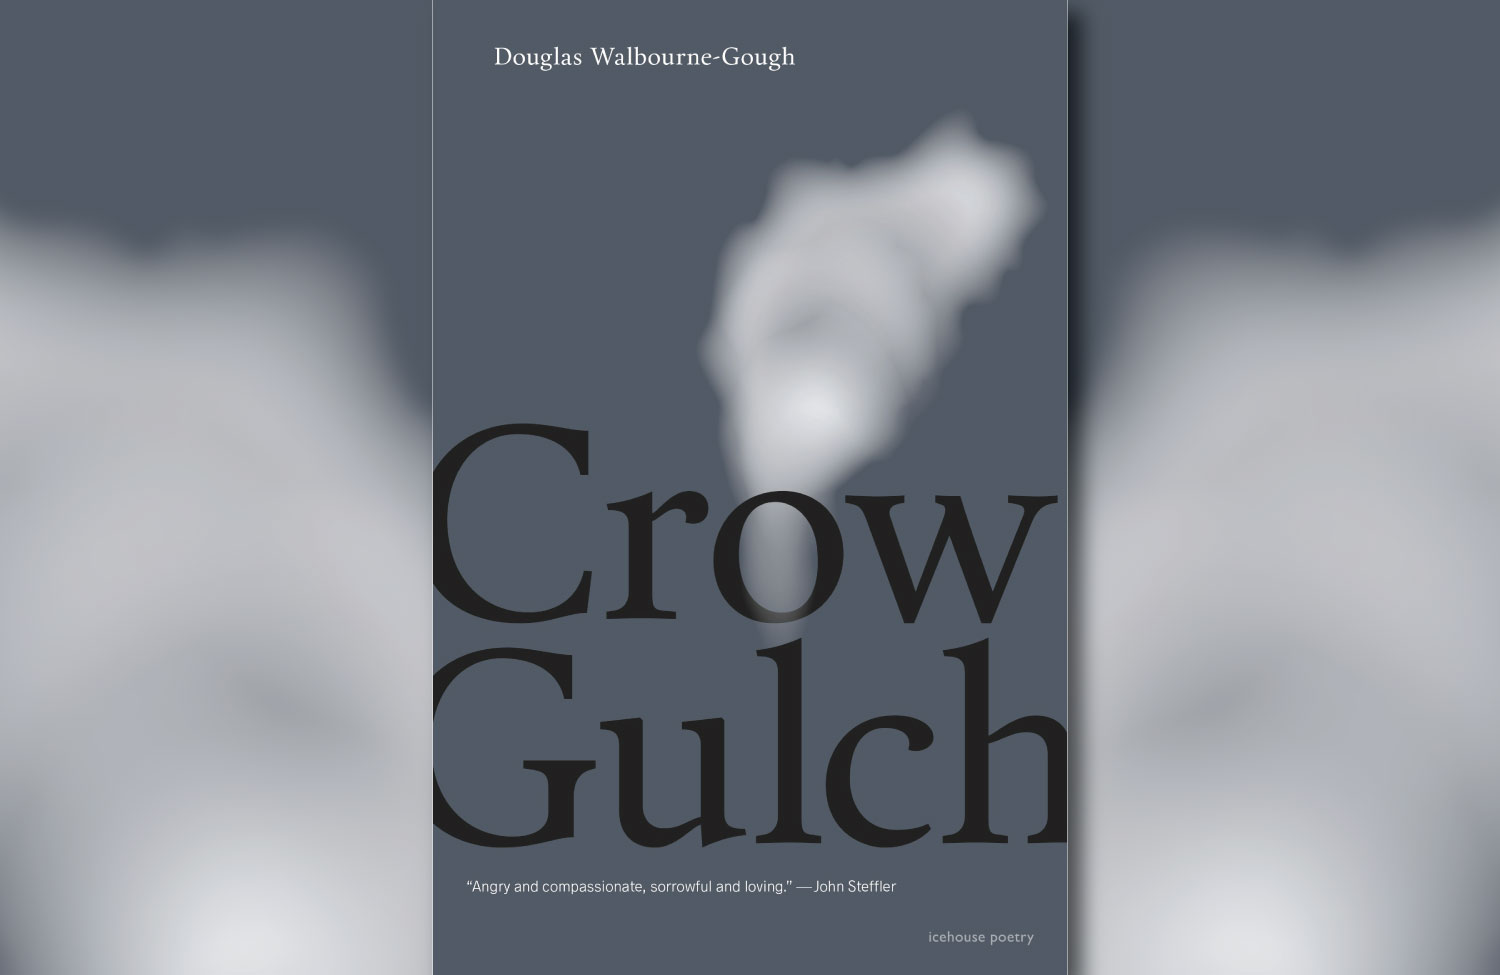 Review: Douglas Walbourne-Gough’s “Crow Gulch”